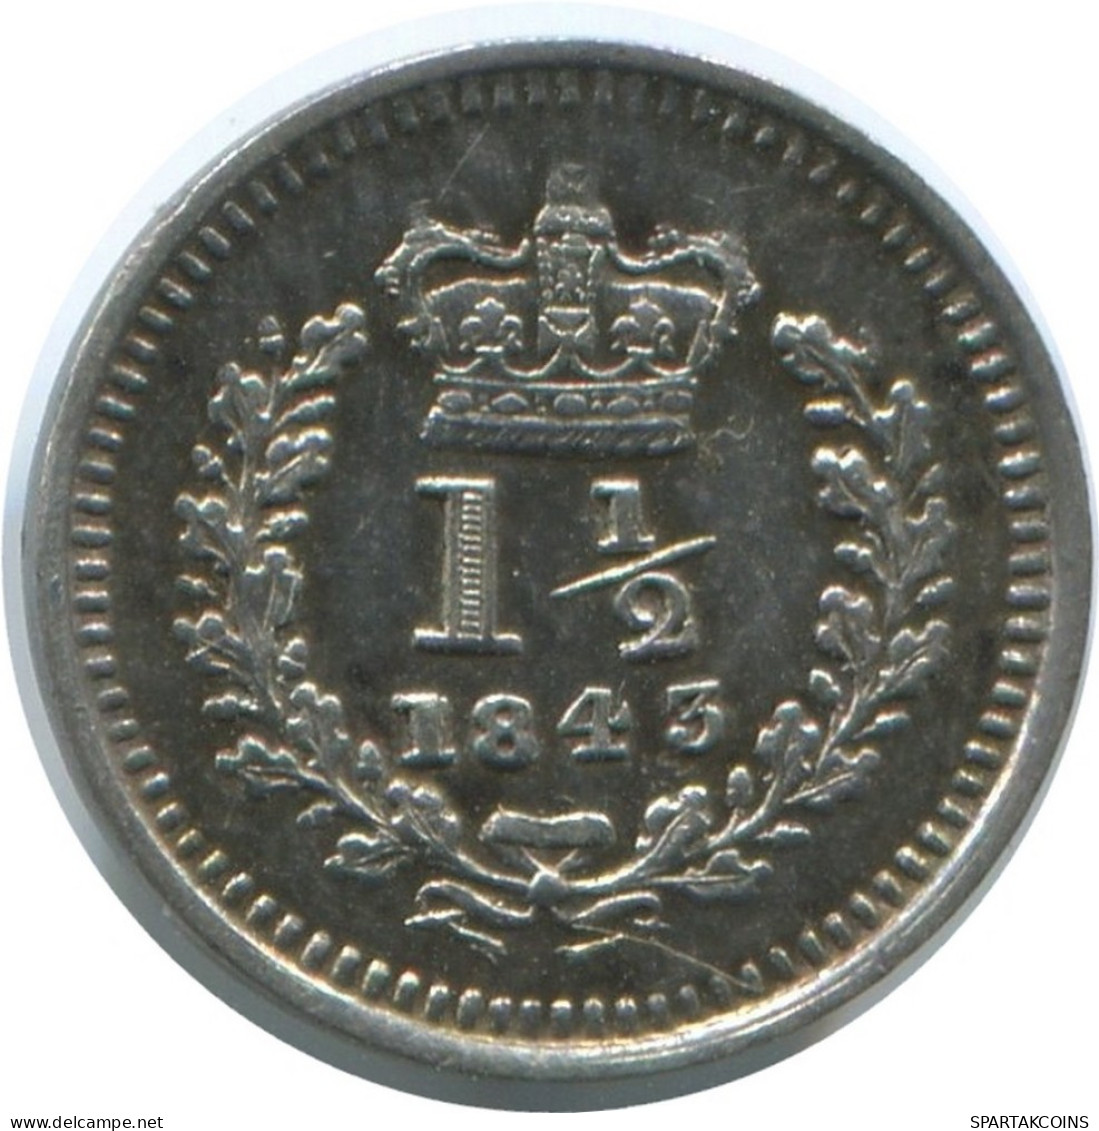 1 1/2 PENCE 1843 UK GBAN BRETAÑA GREAT BRITAIN PLATA Colonial #AE802.16.E - E. 1 1/2 - 2 Pence